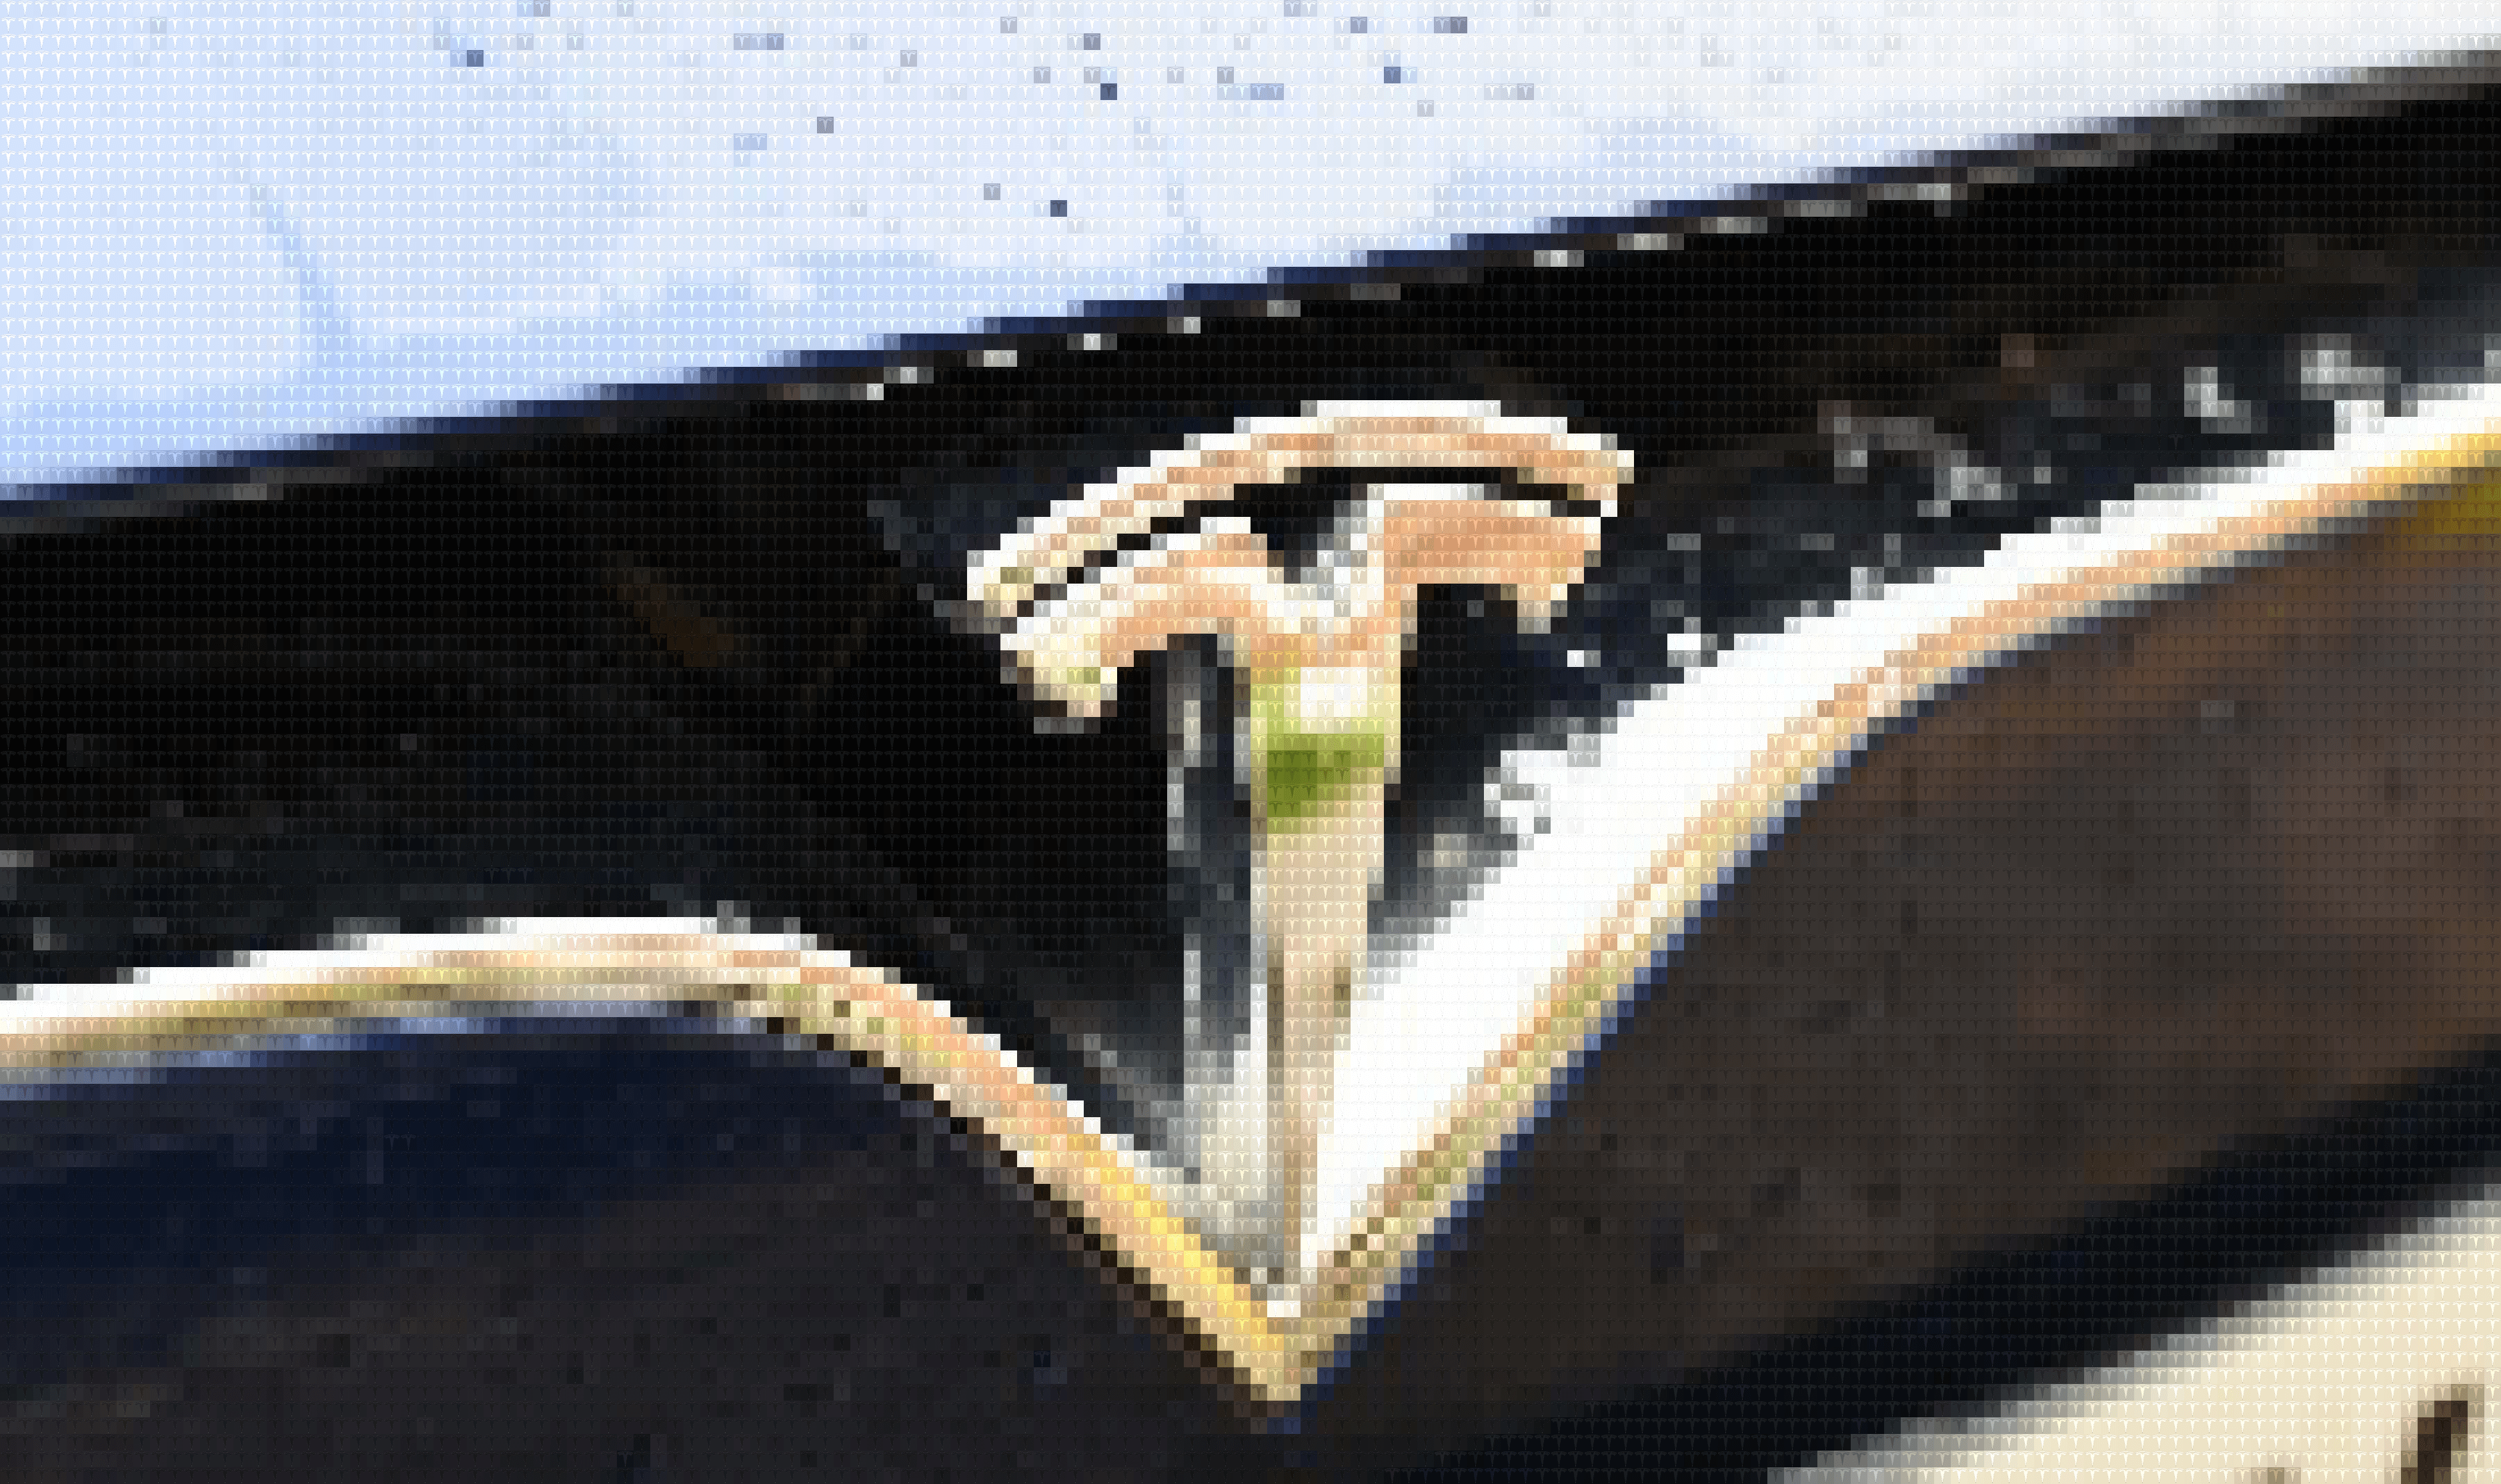 Tesla image after pixelation